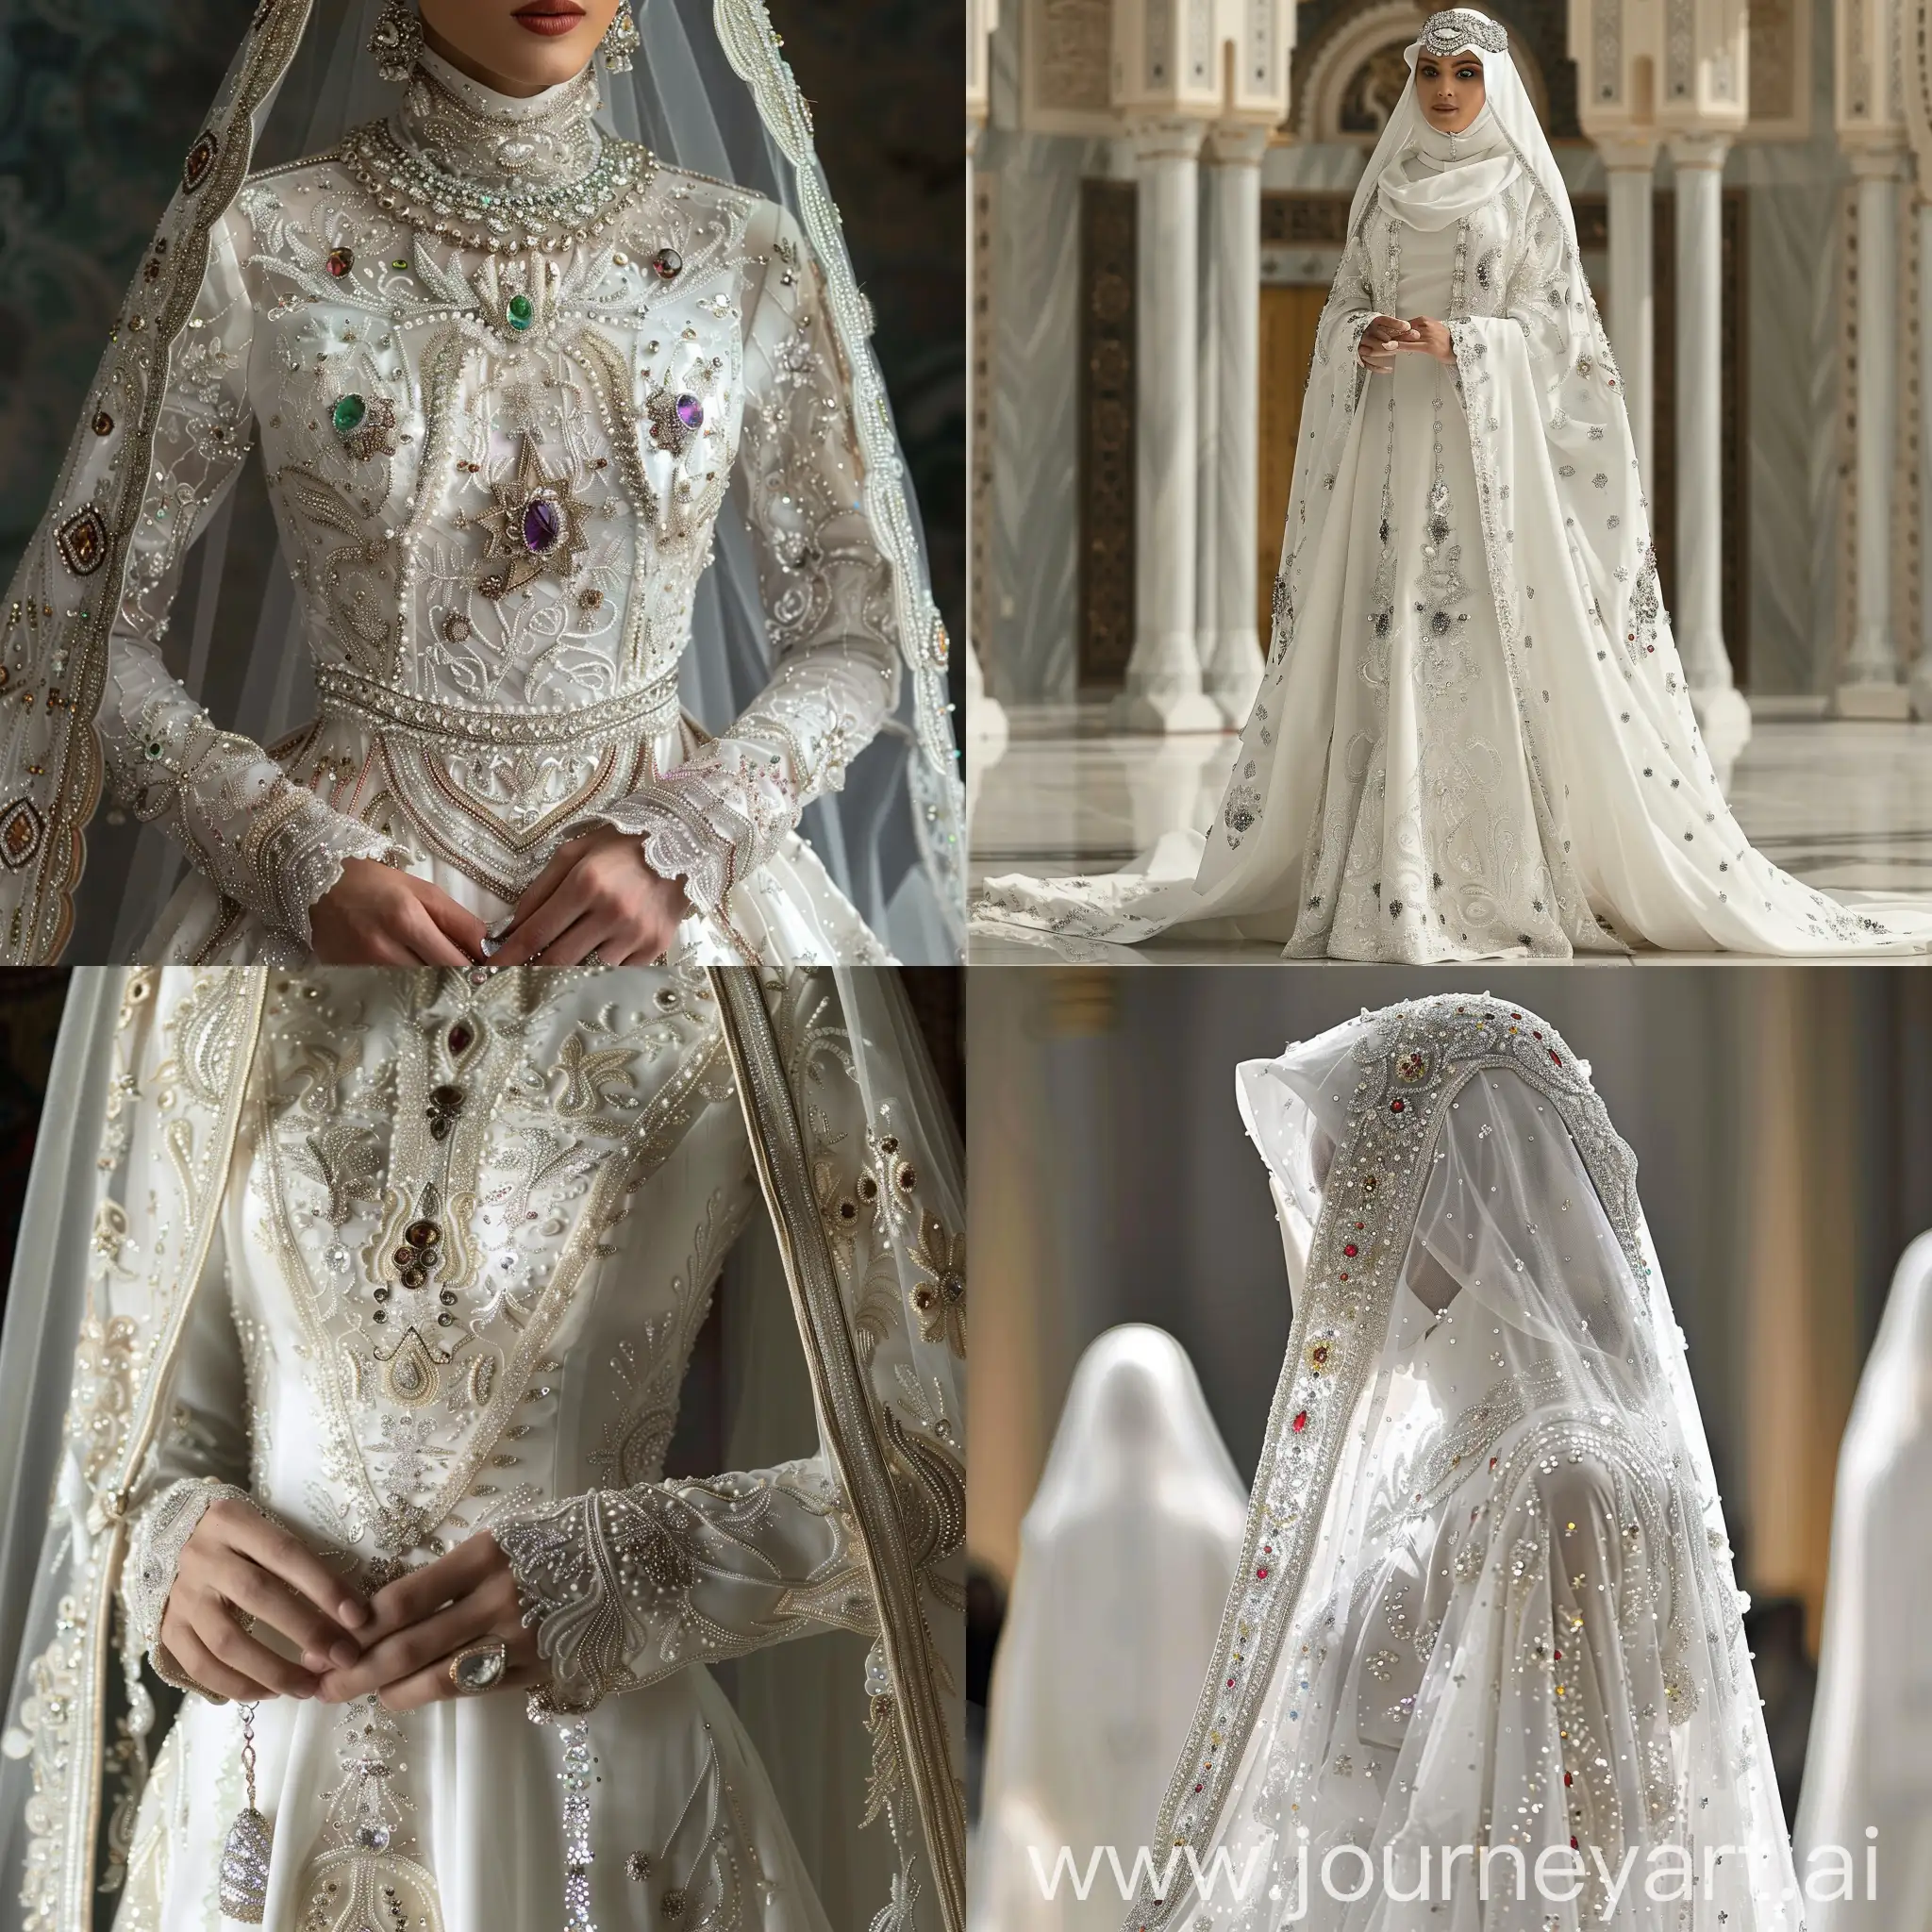 Elegant-Saudi-Arabian-Wedding-Dress-with-Gemstone-and-Sequin-Embellishments